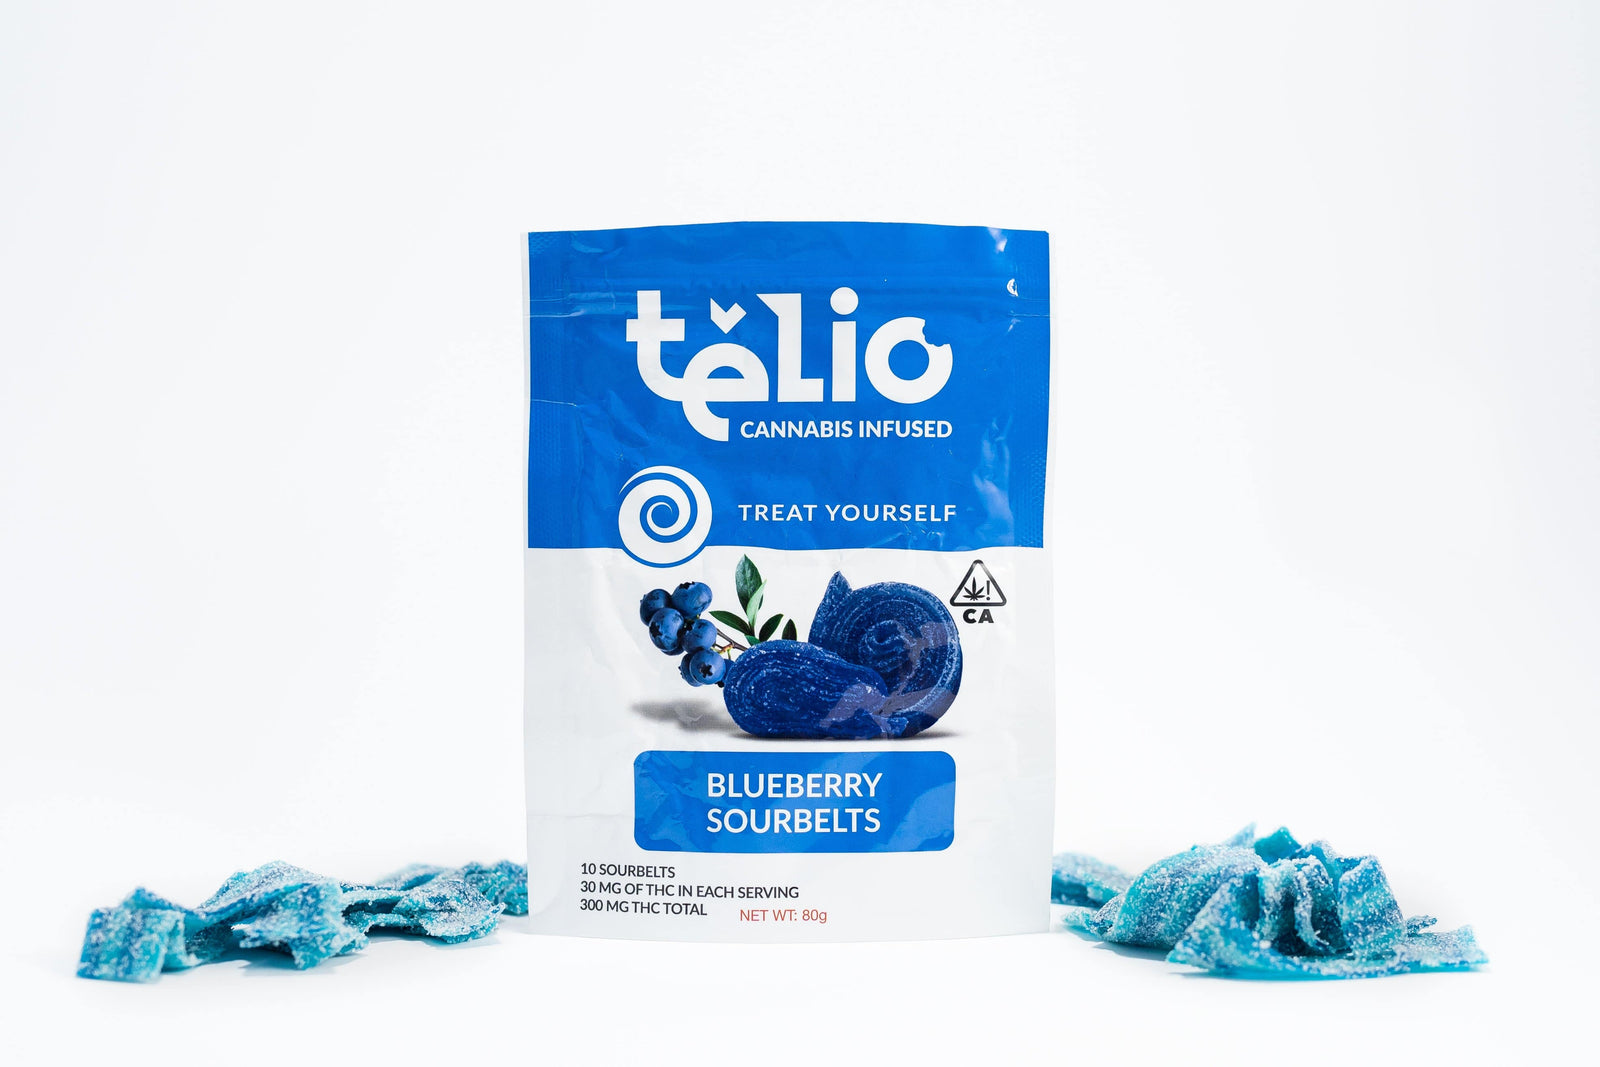 Telio Blueberry Sour Belts Gummy Edible - The Balloon Room